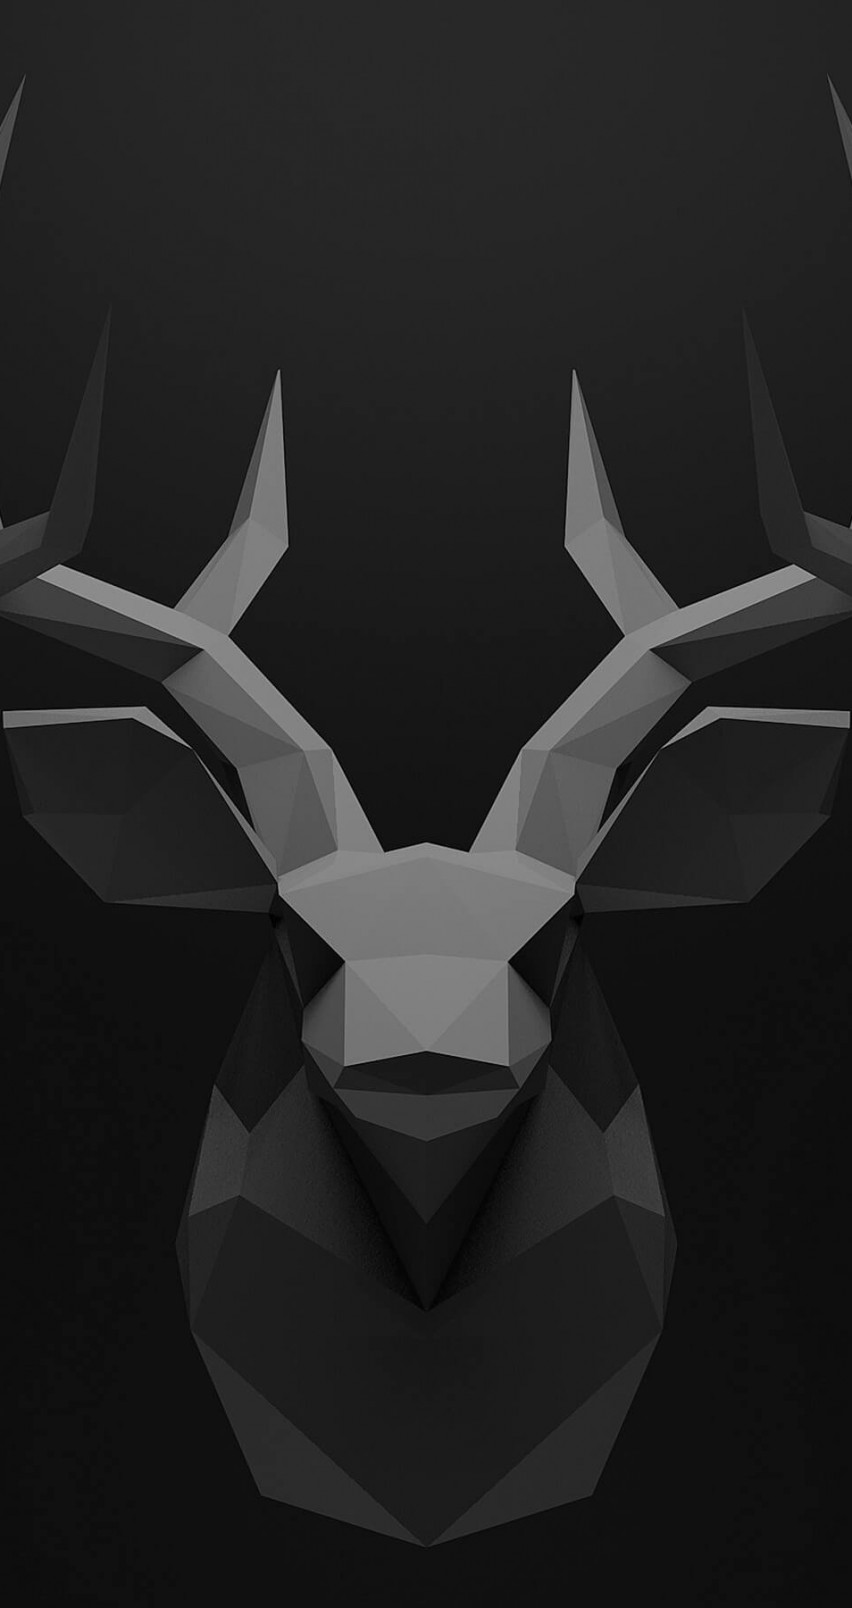 Low Poly Deer Head Wallpaper for Apple iPhone 6 / 6s